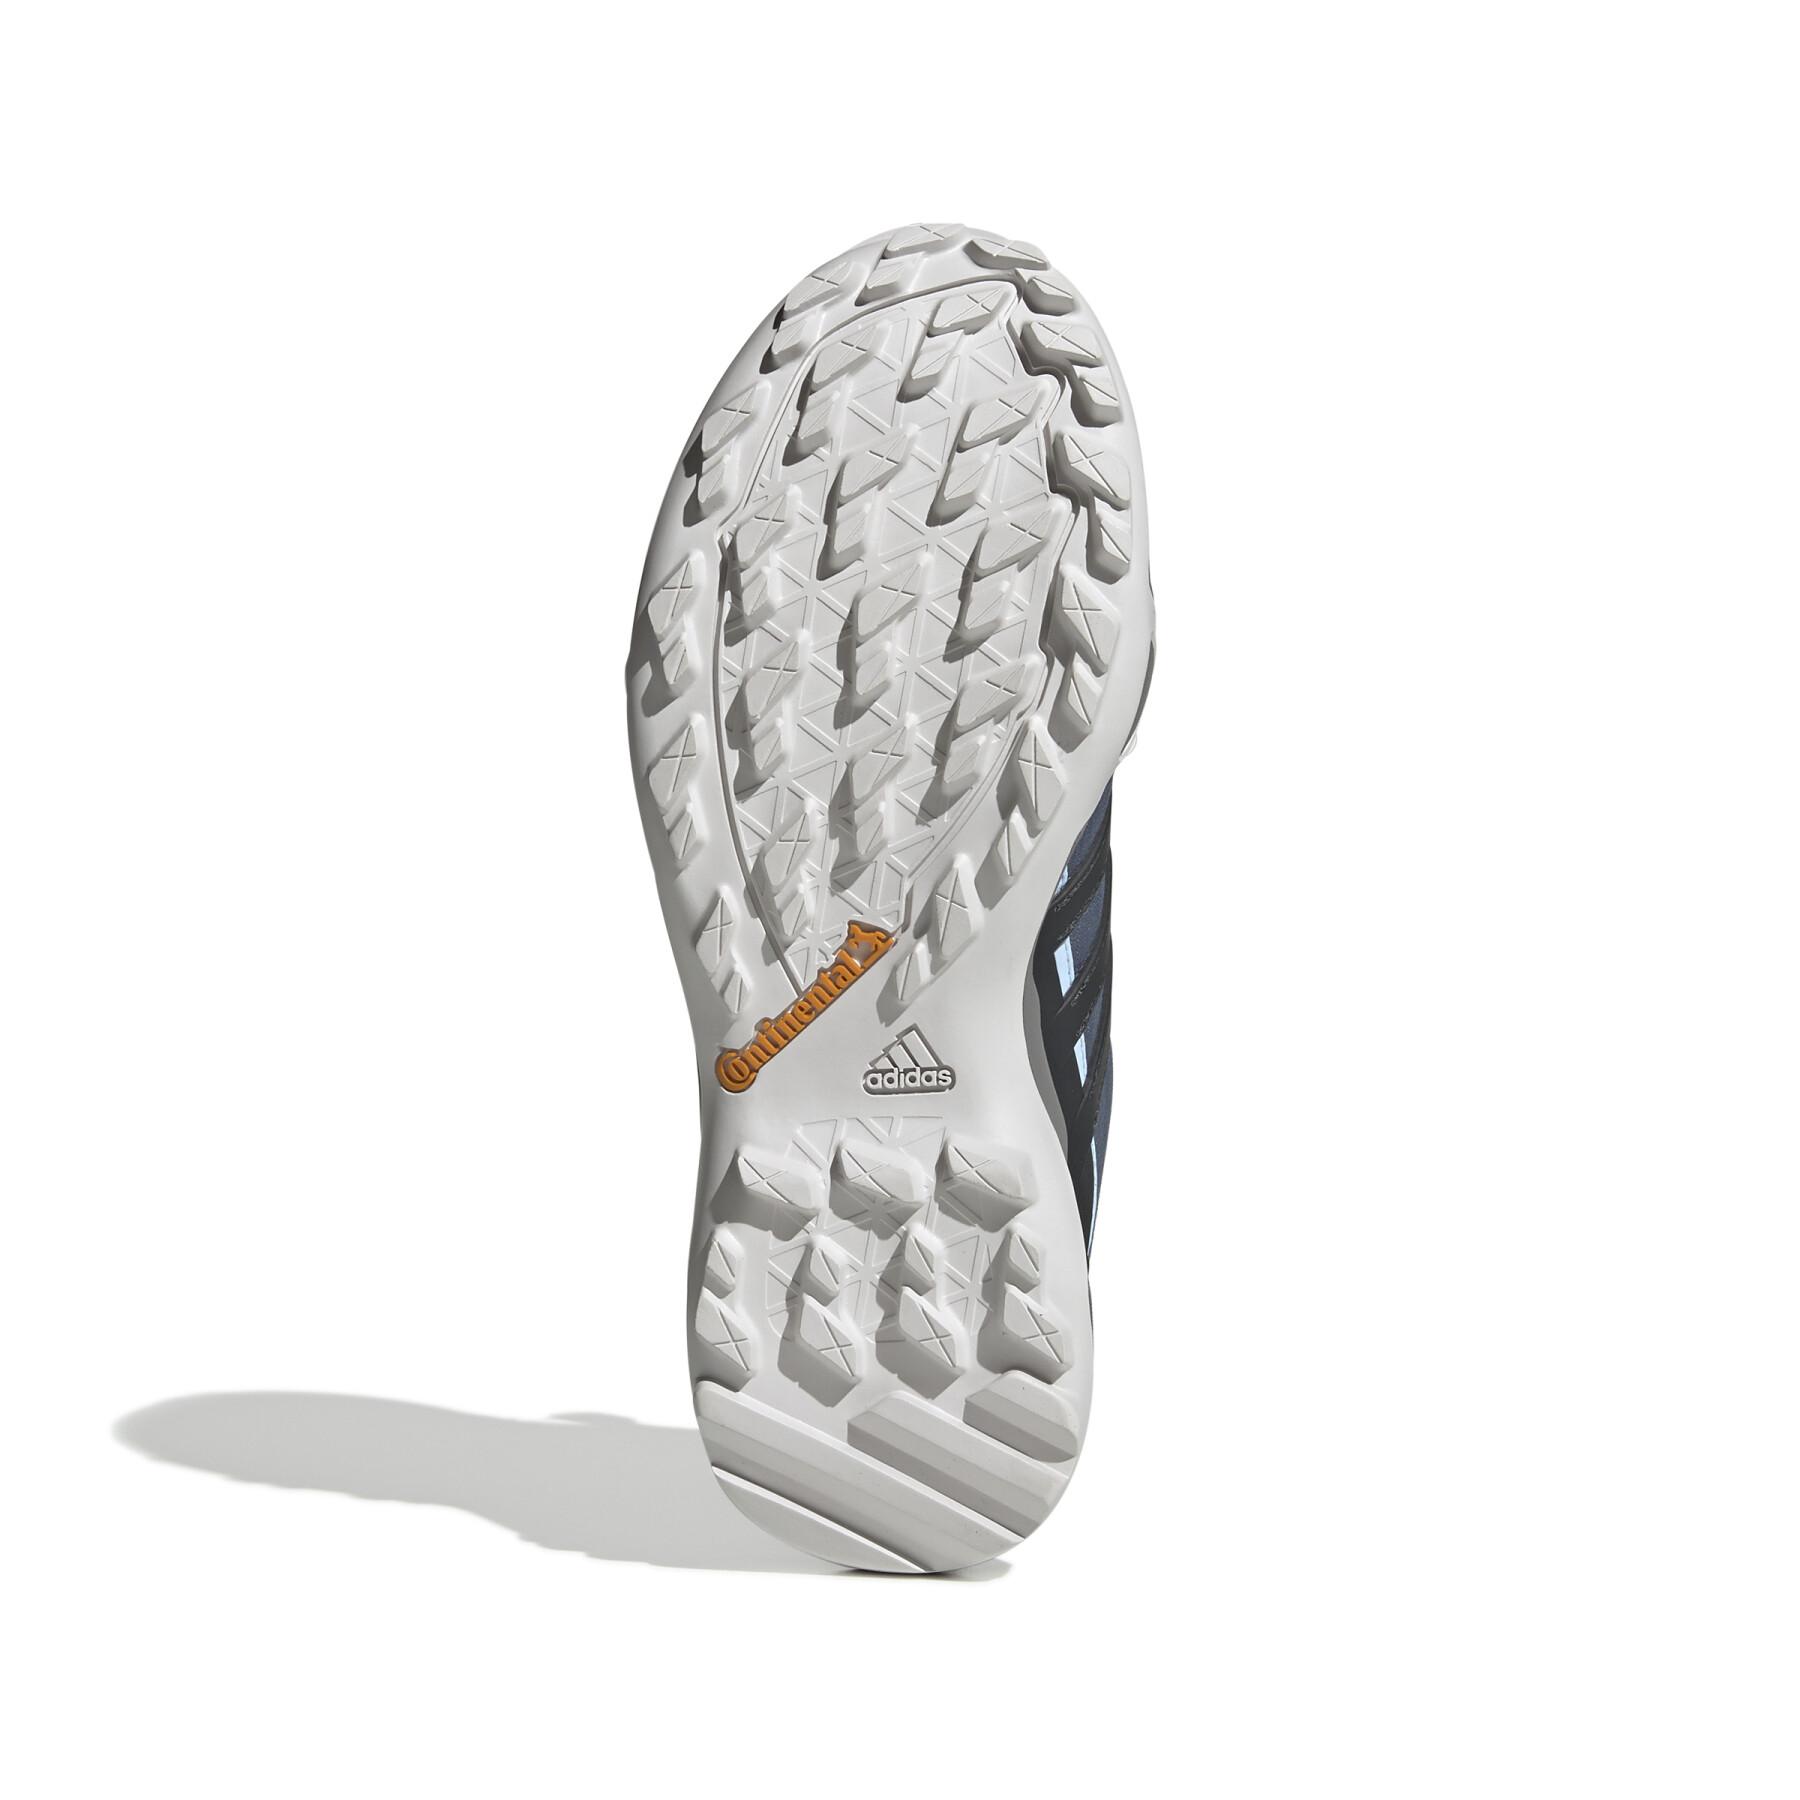 Women's Trail running shoes adidas Terrex Swift R2 Gtx